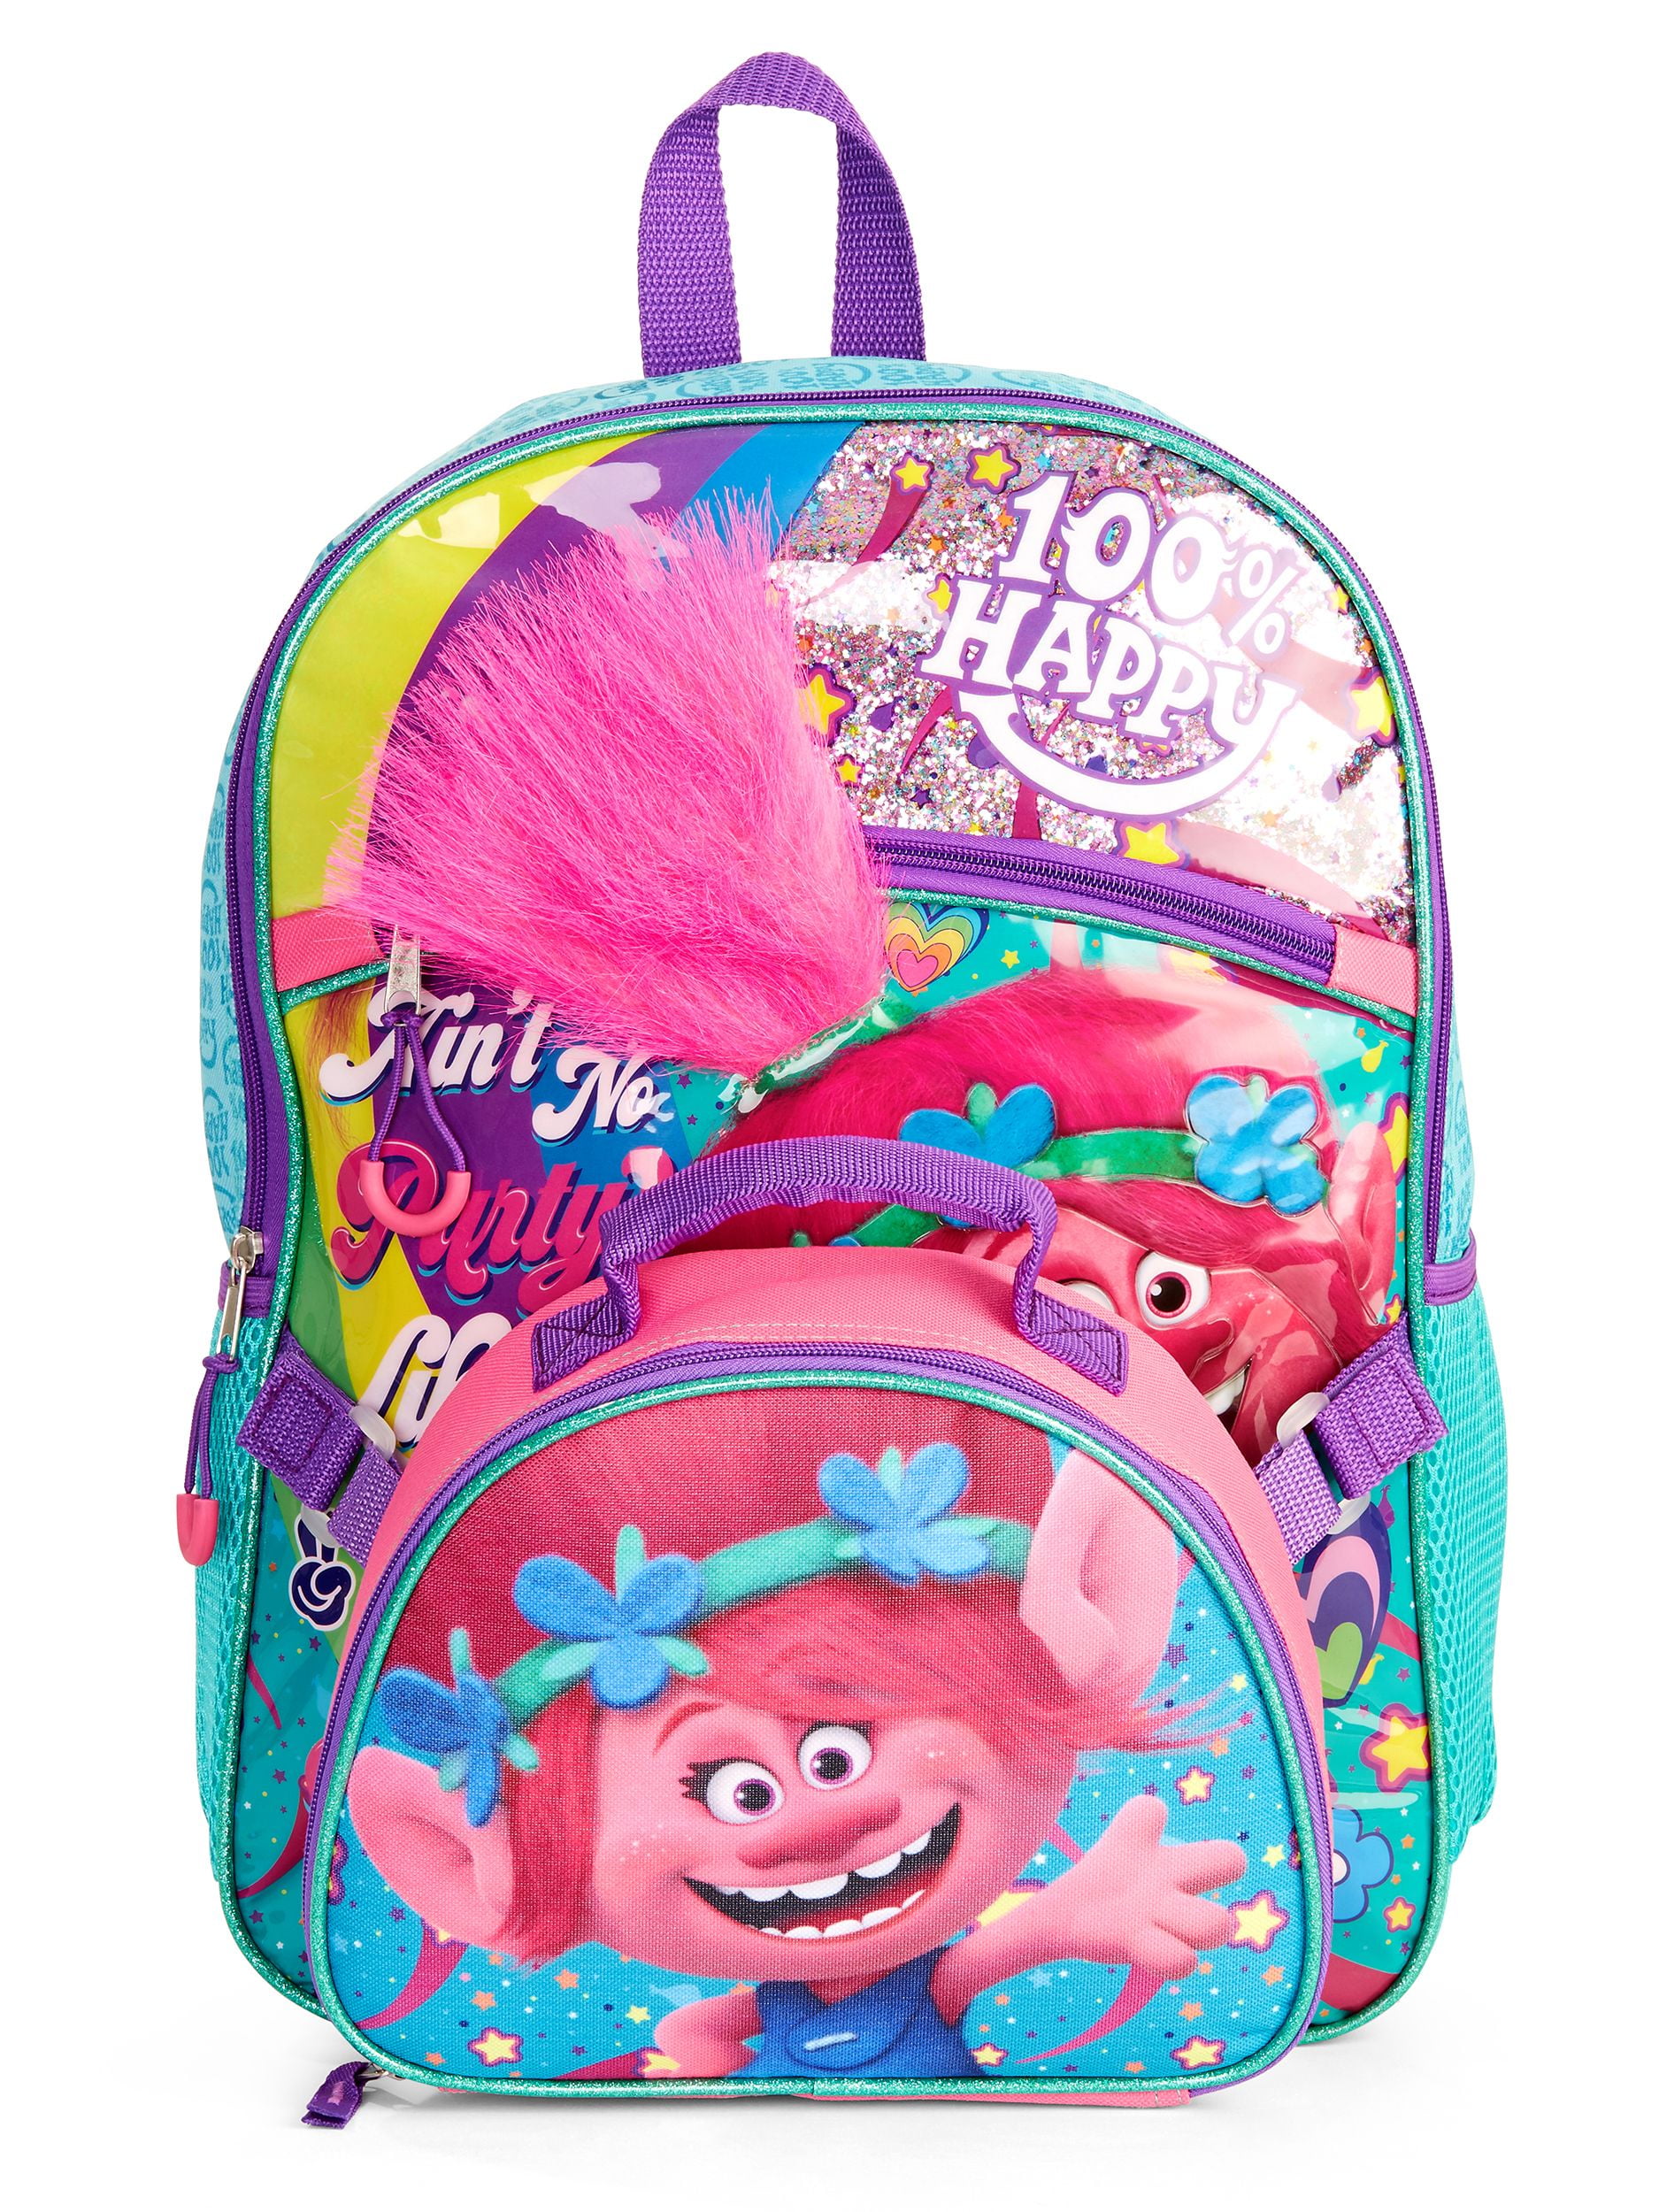 Kids Trolls Beach Bag Pink Shoulder Party Bag for Girls School Essentials